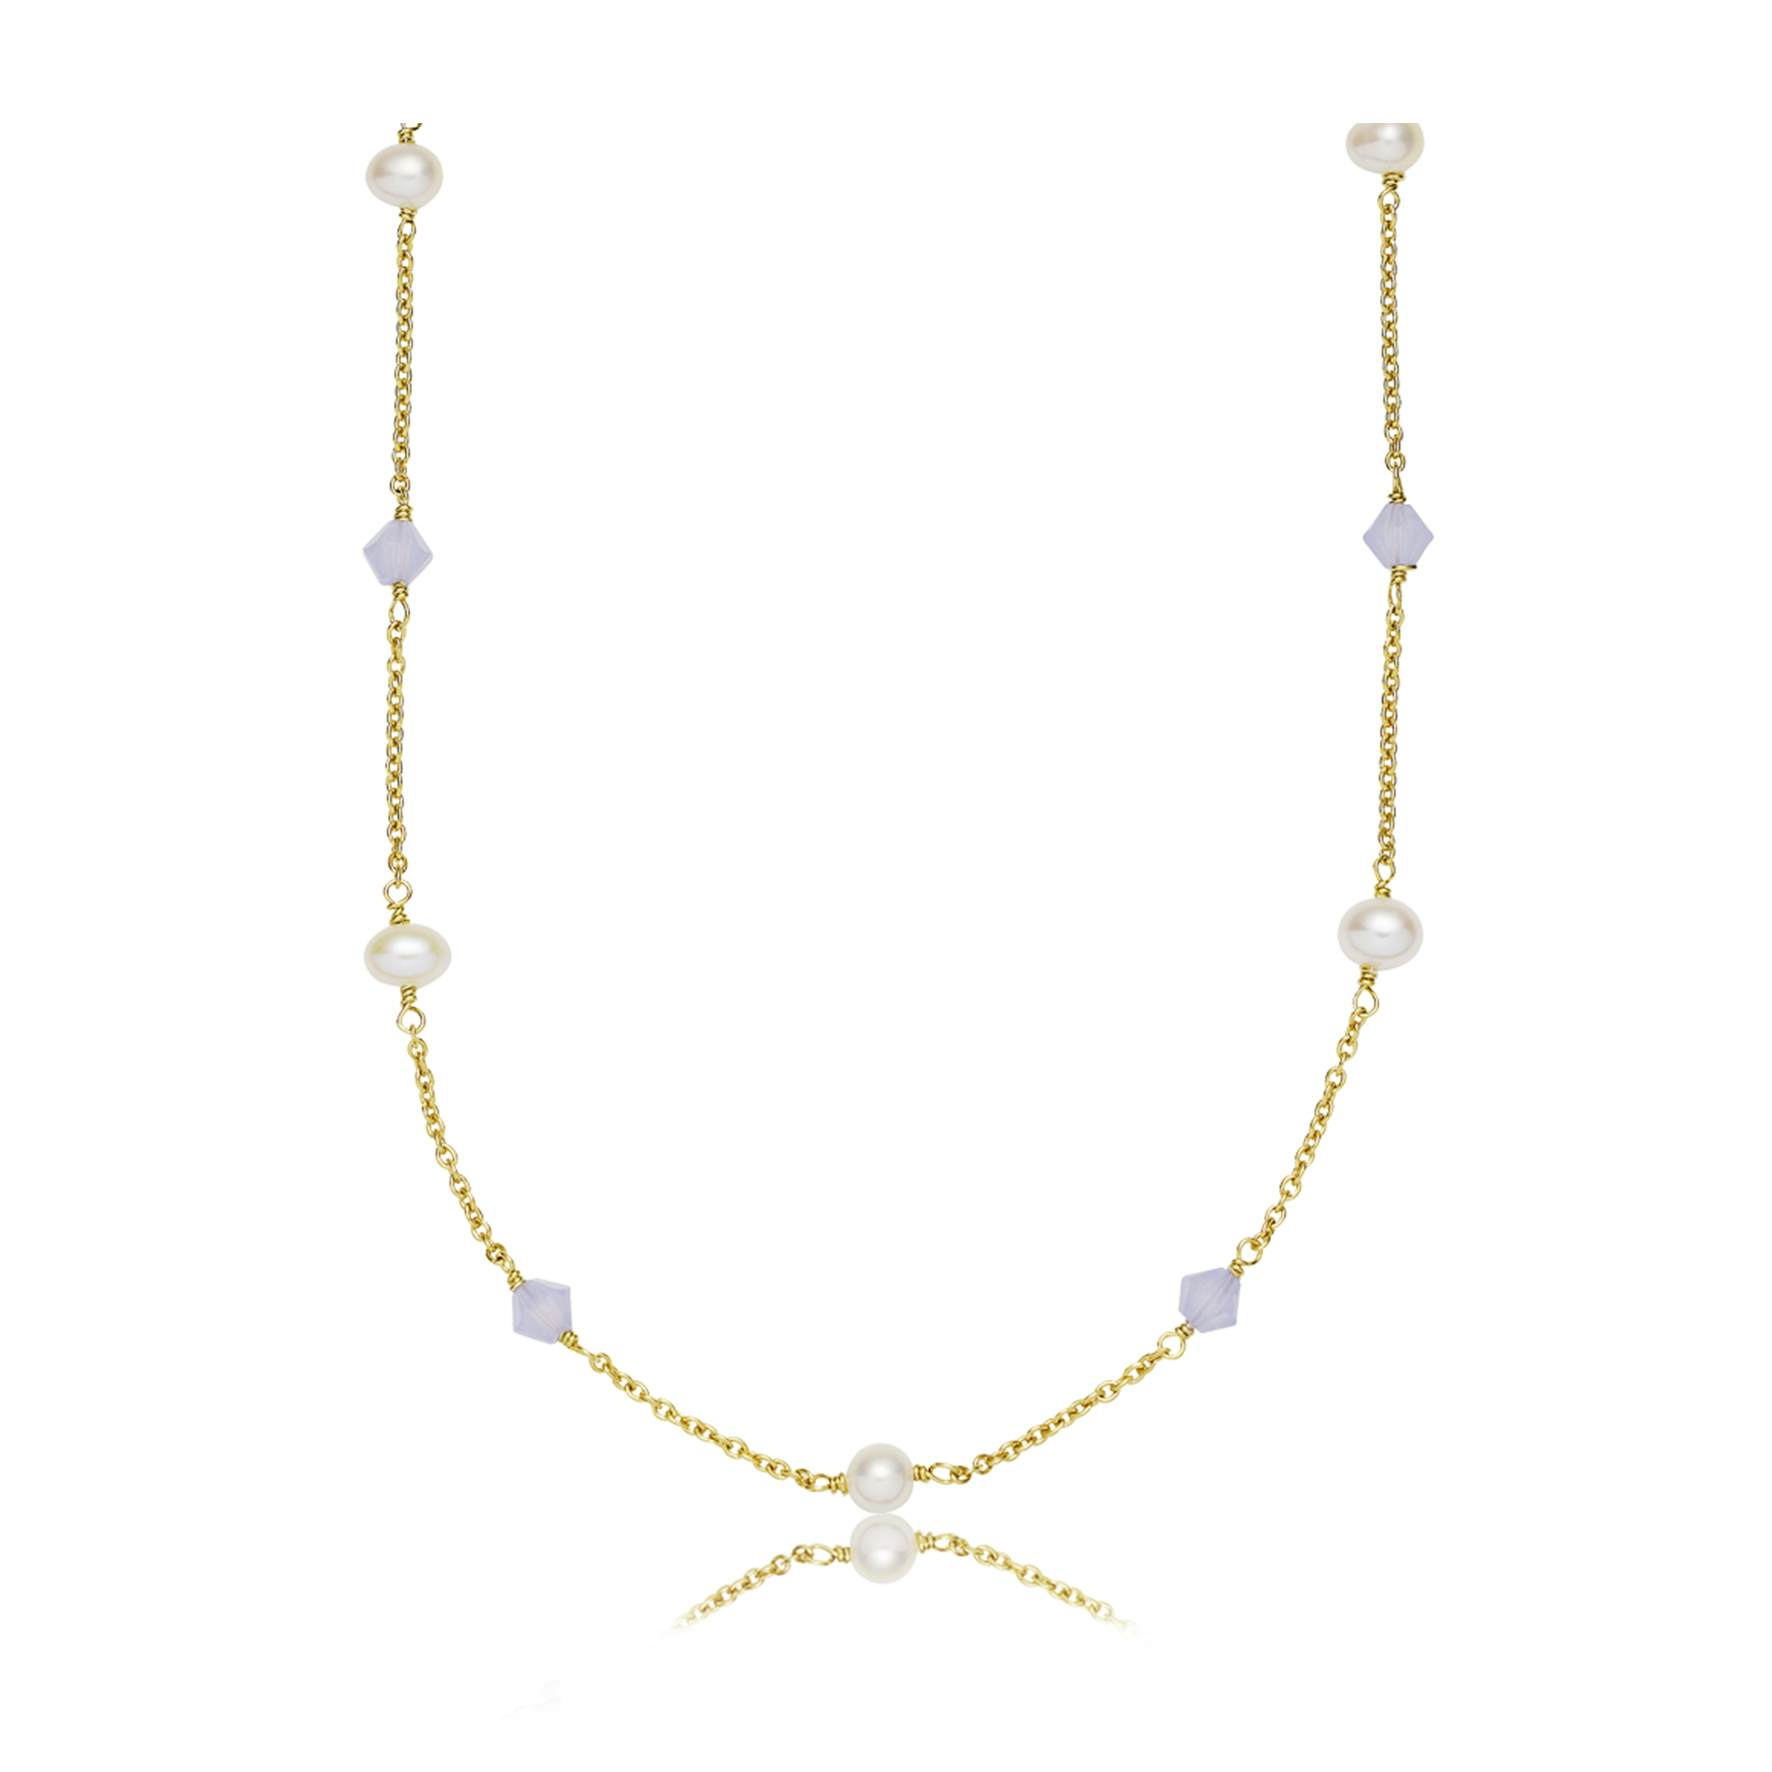 Olivia by Sistie Classic Necklace von Sistie in Vergoldet-Silber Sterling 925